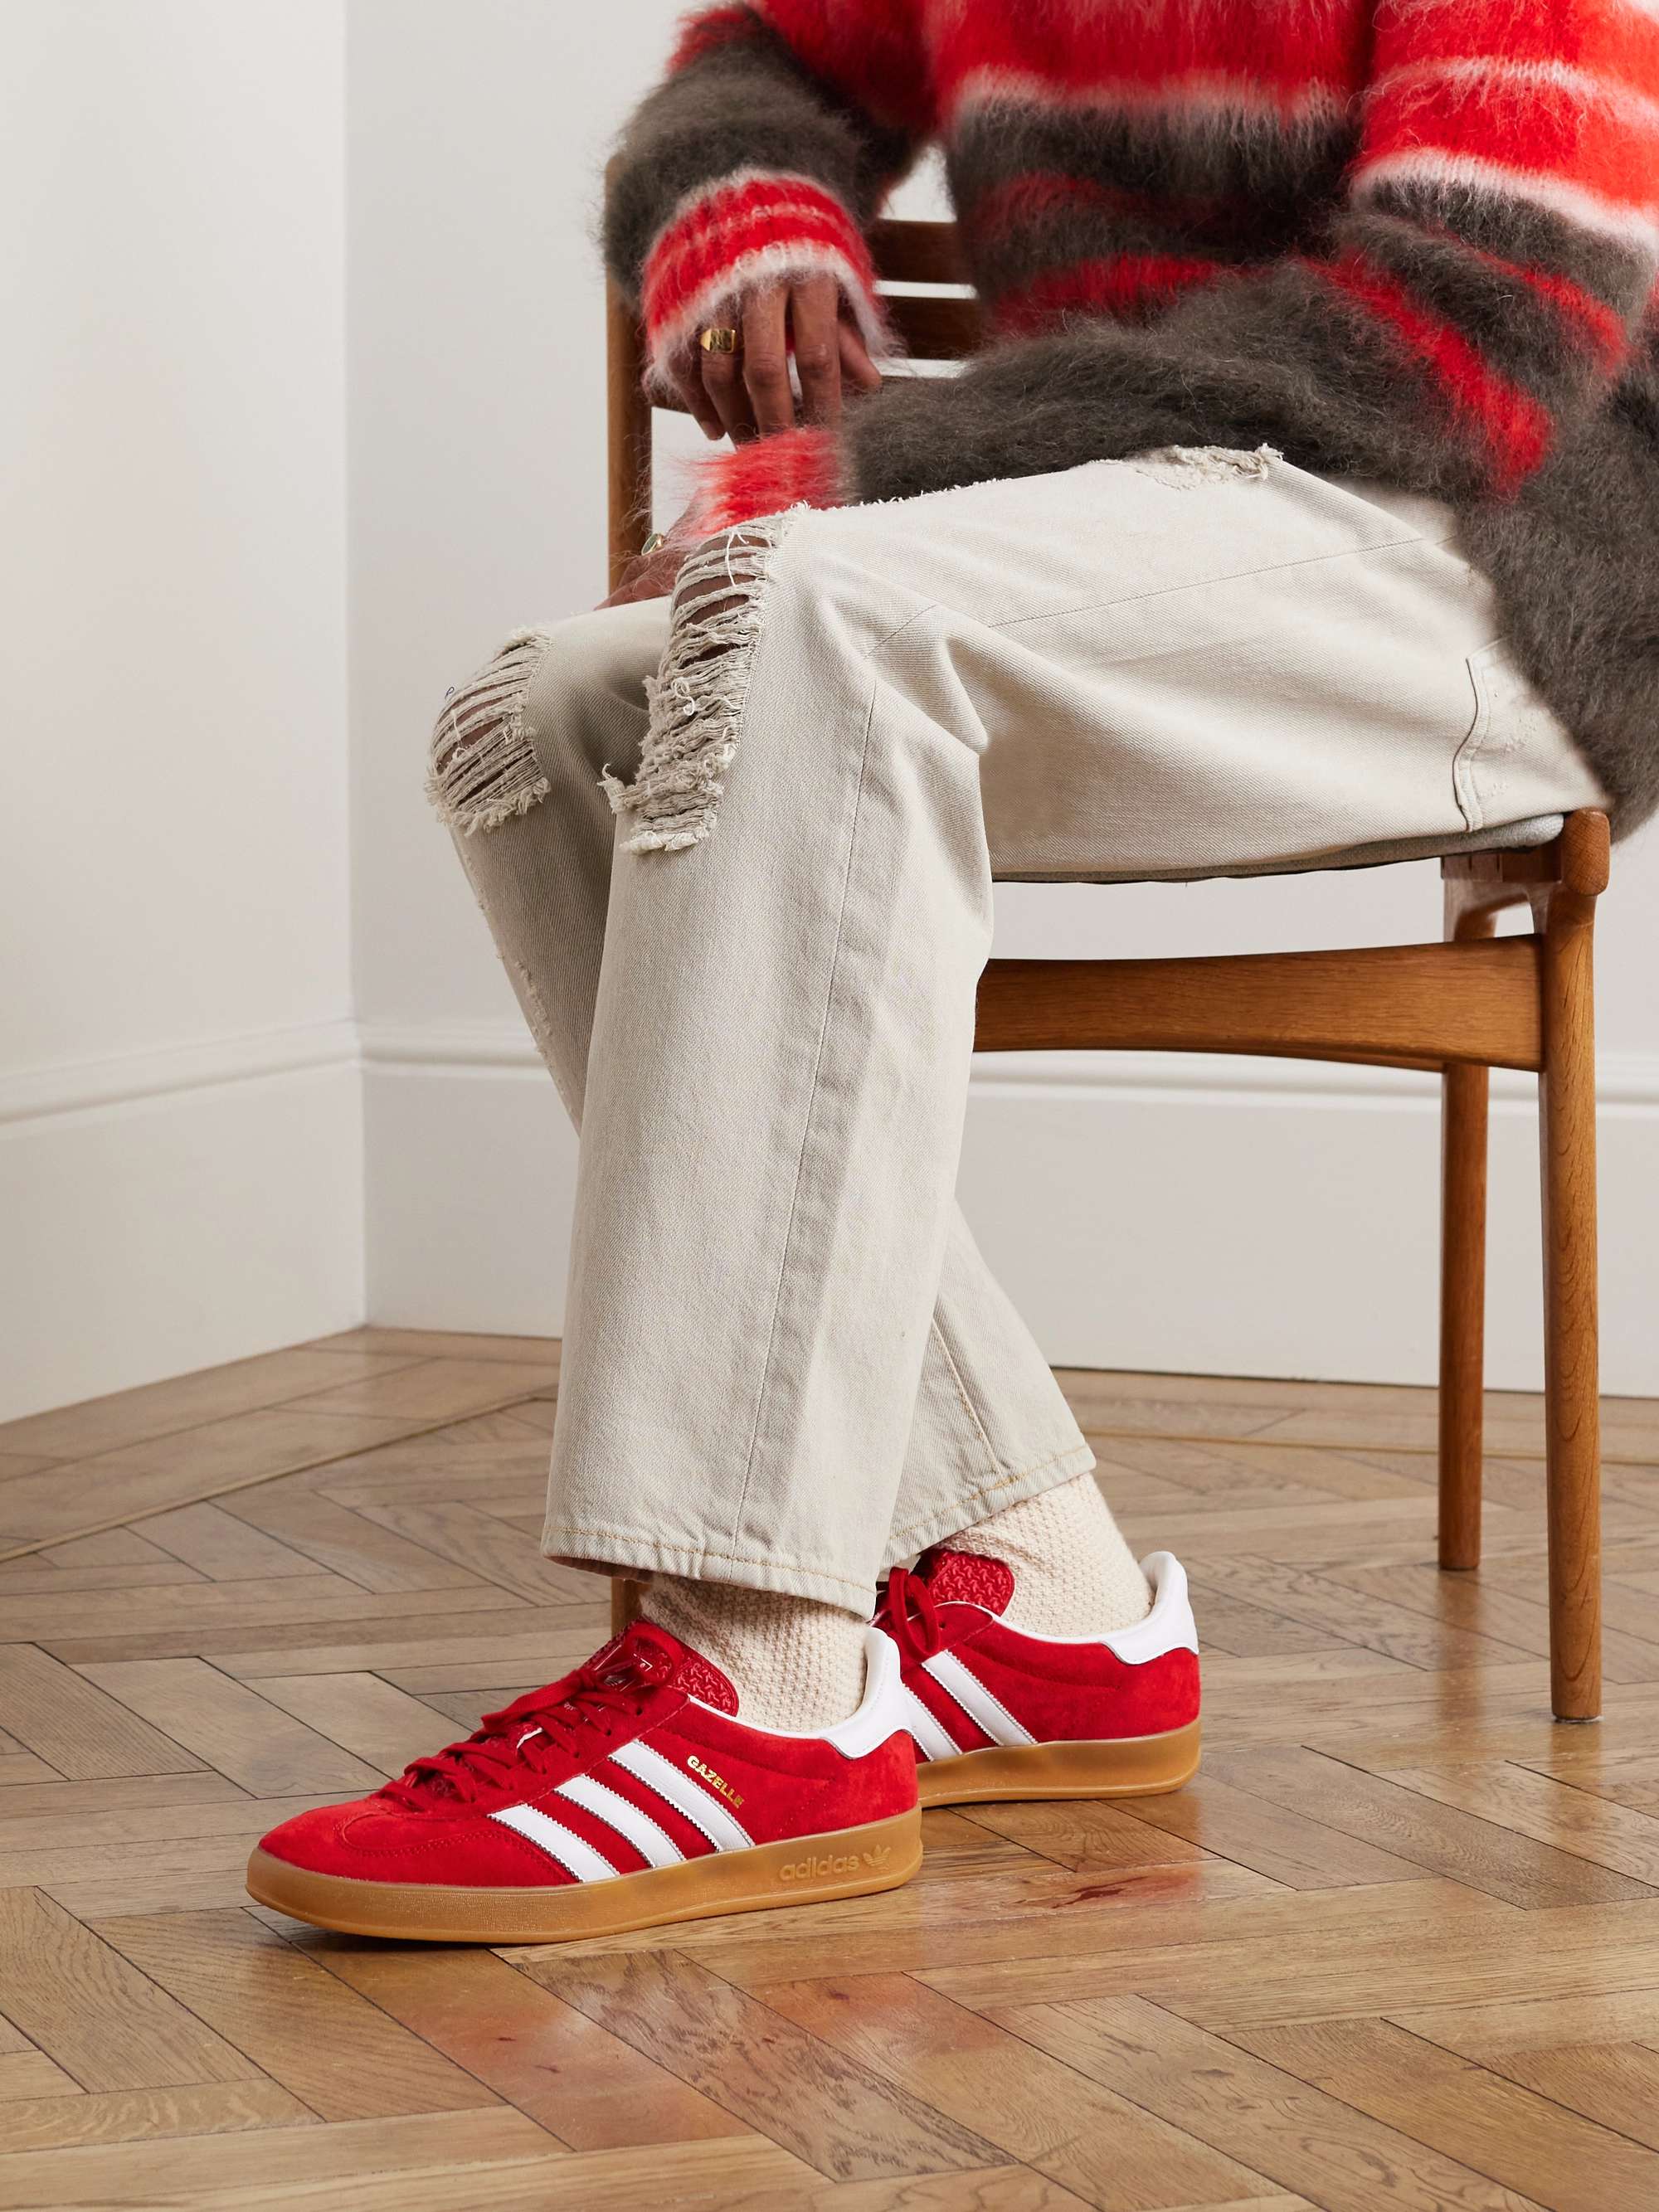 Gazelle Indoor Leather-Trimmed Suede Sneakers